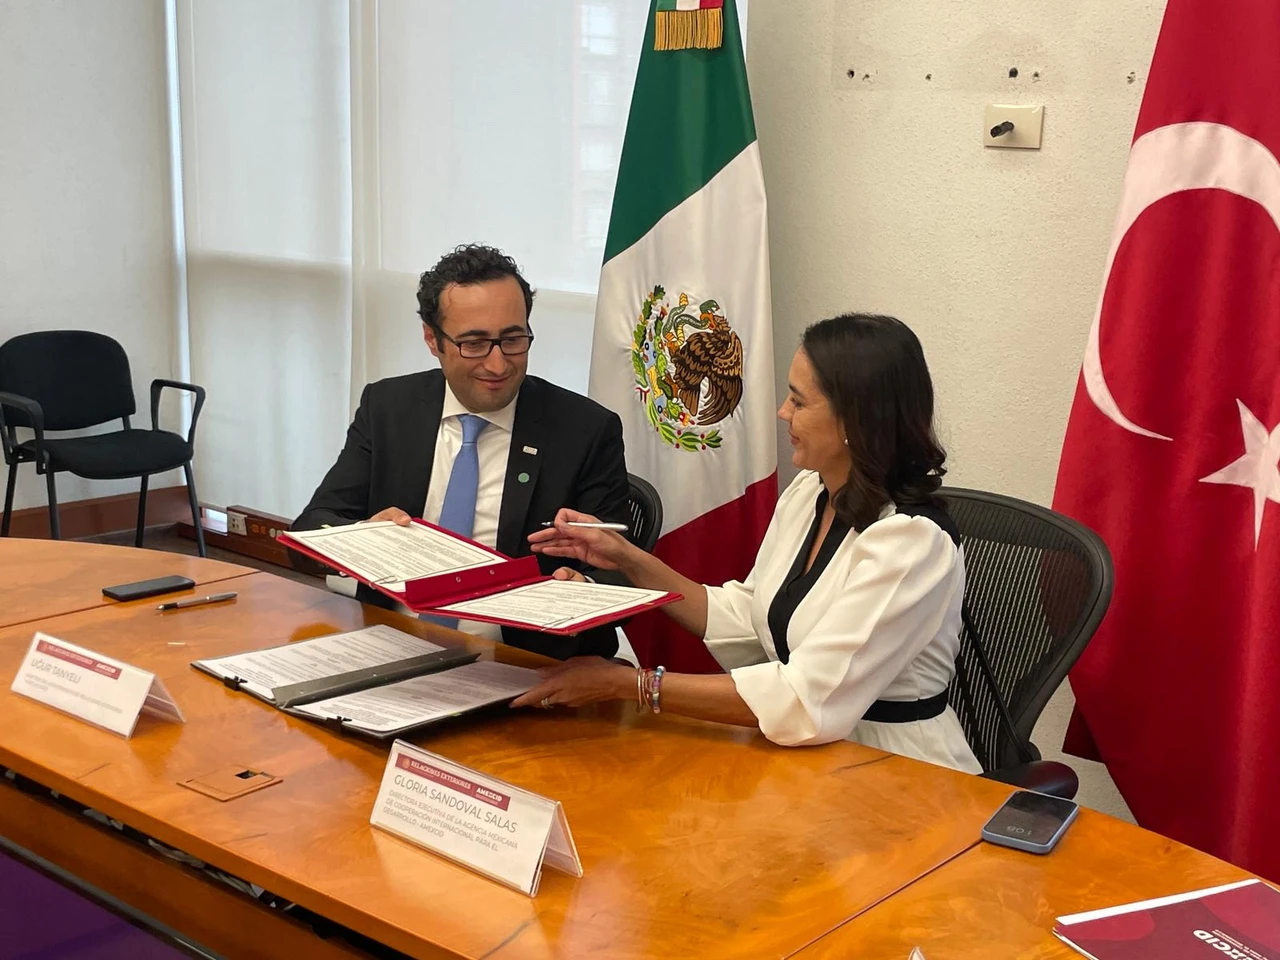 Türkiye, Mexico sign agricultural development MoU